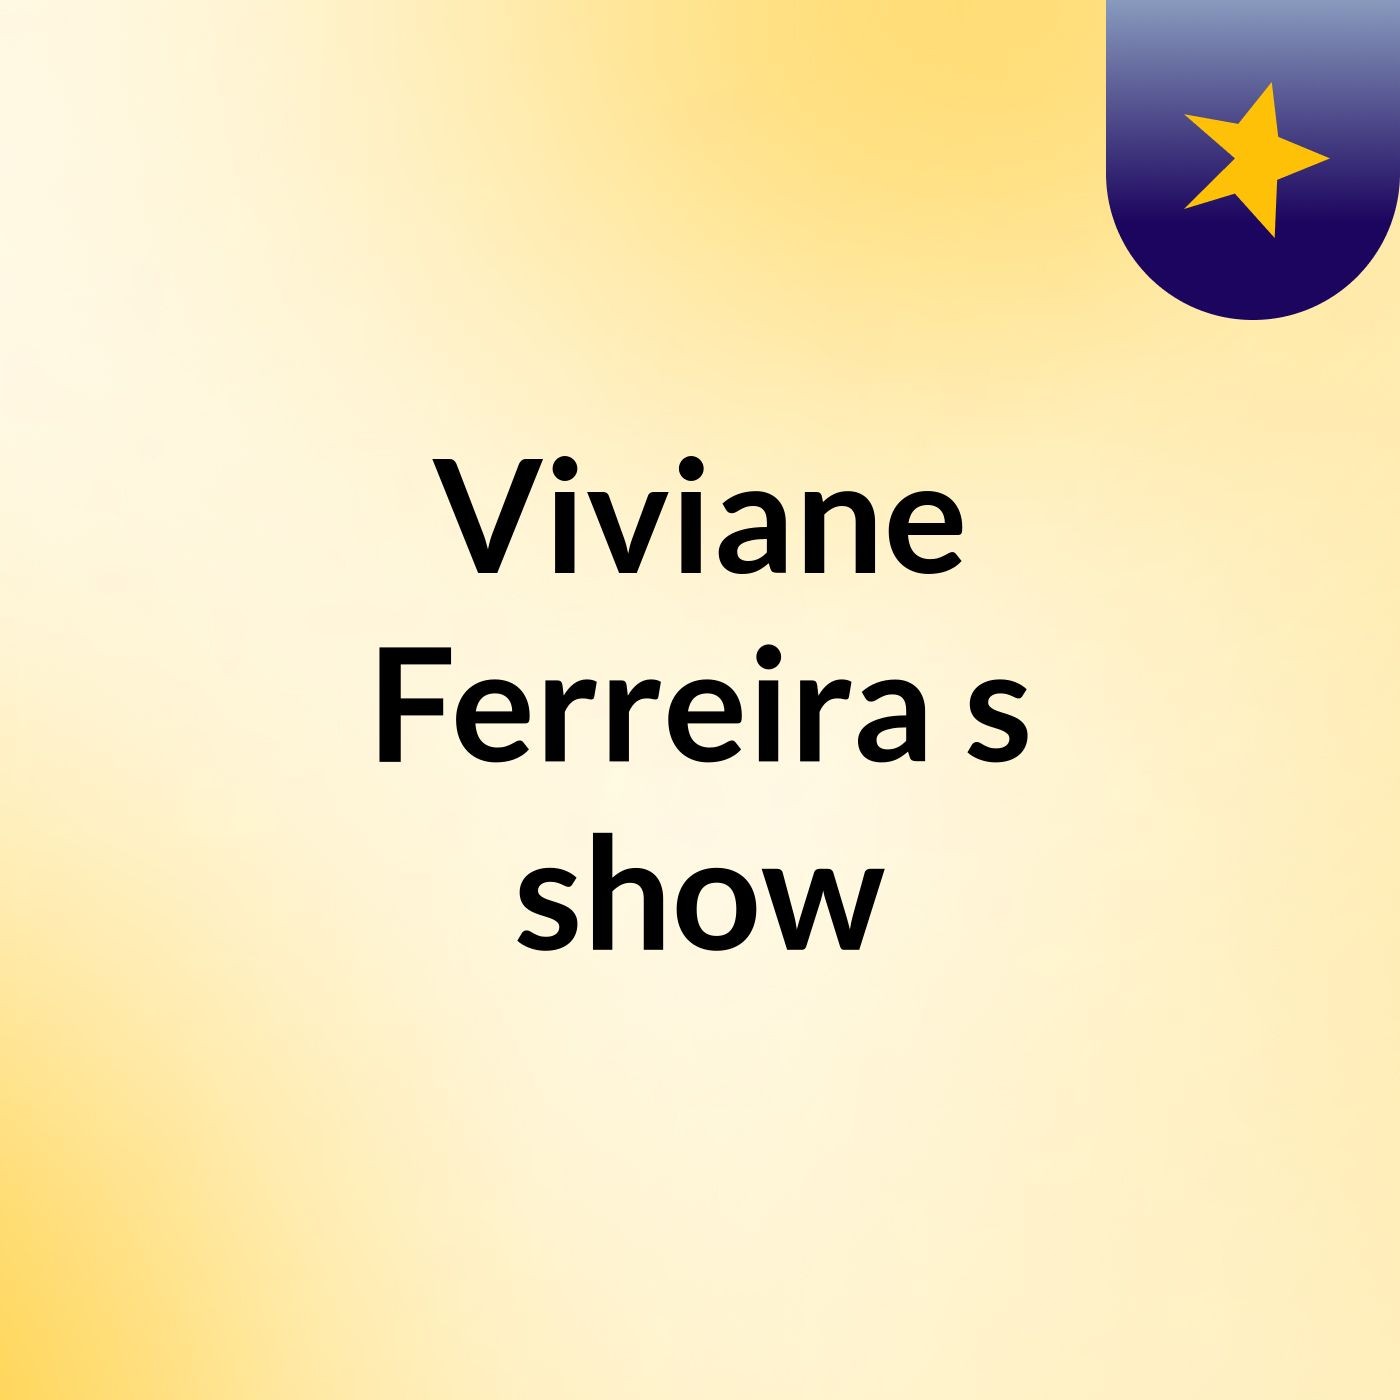 Viviane Ferreira's show